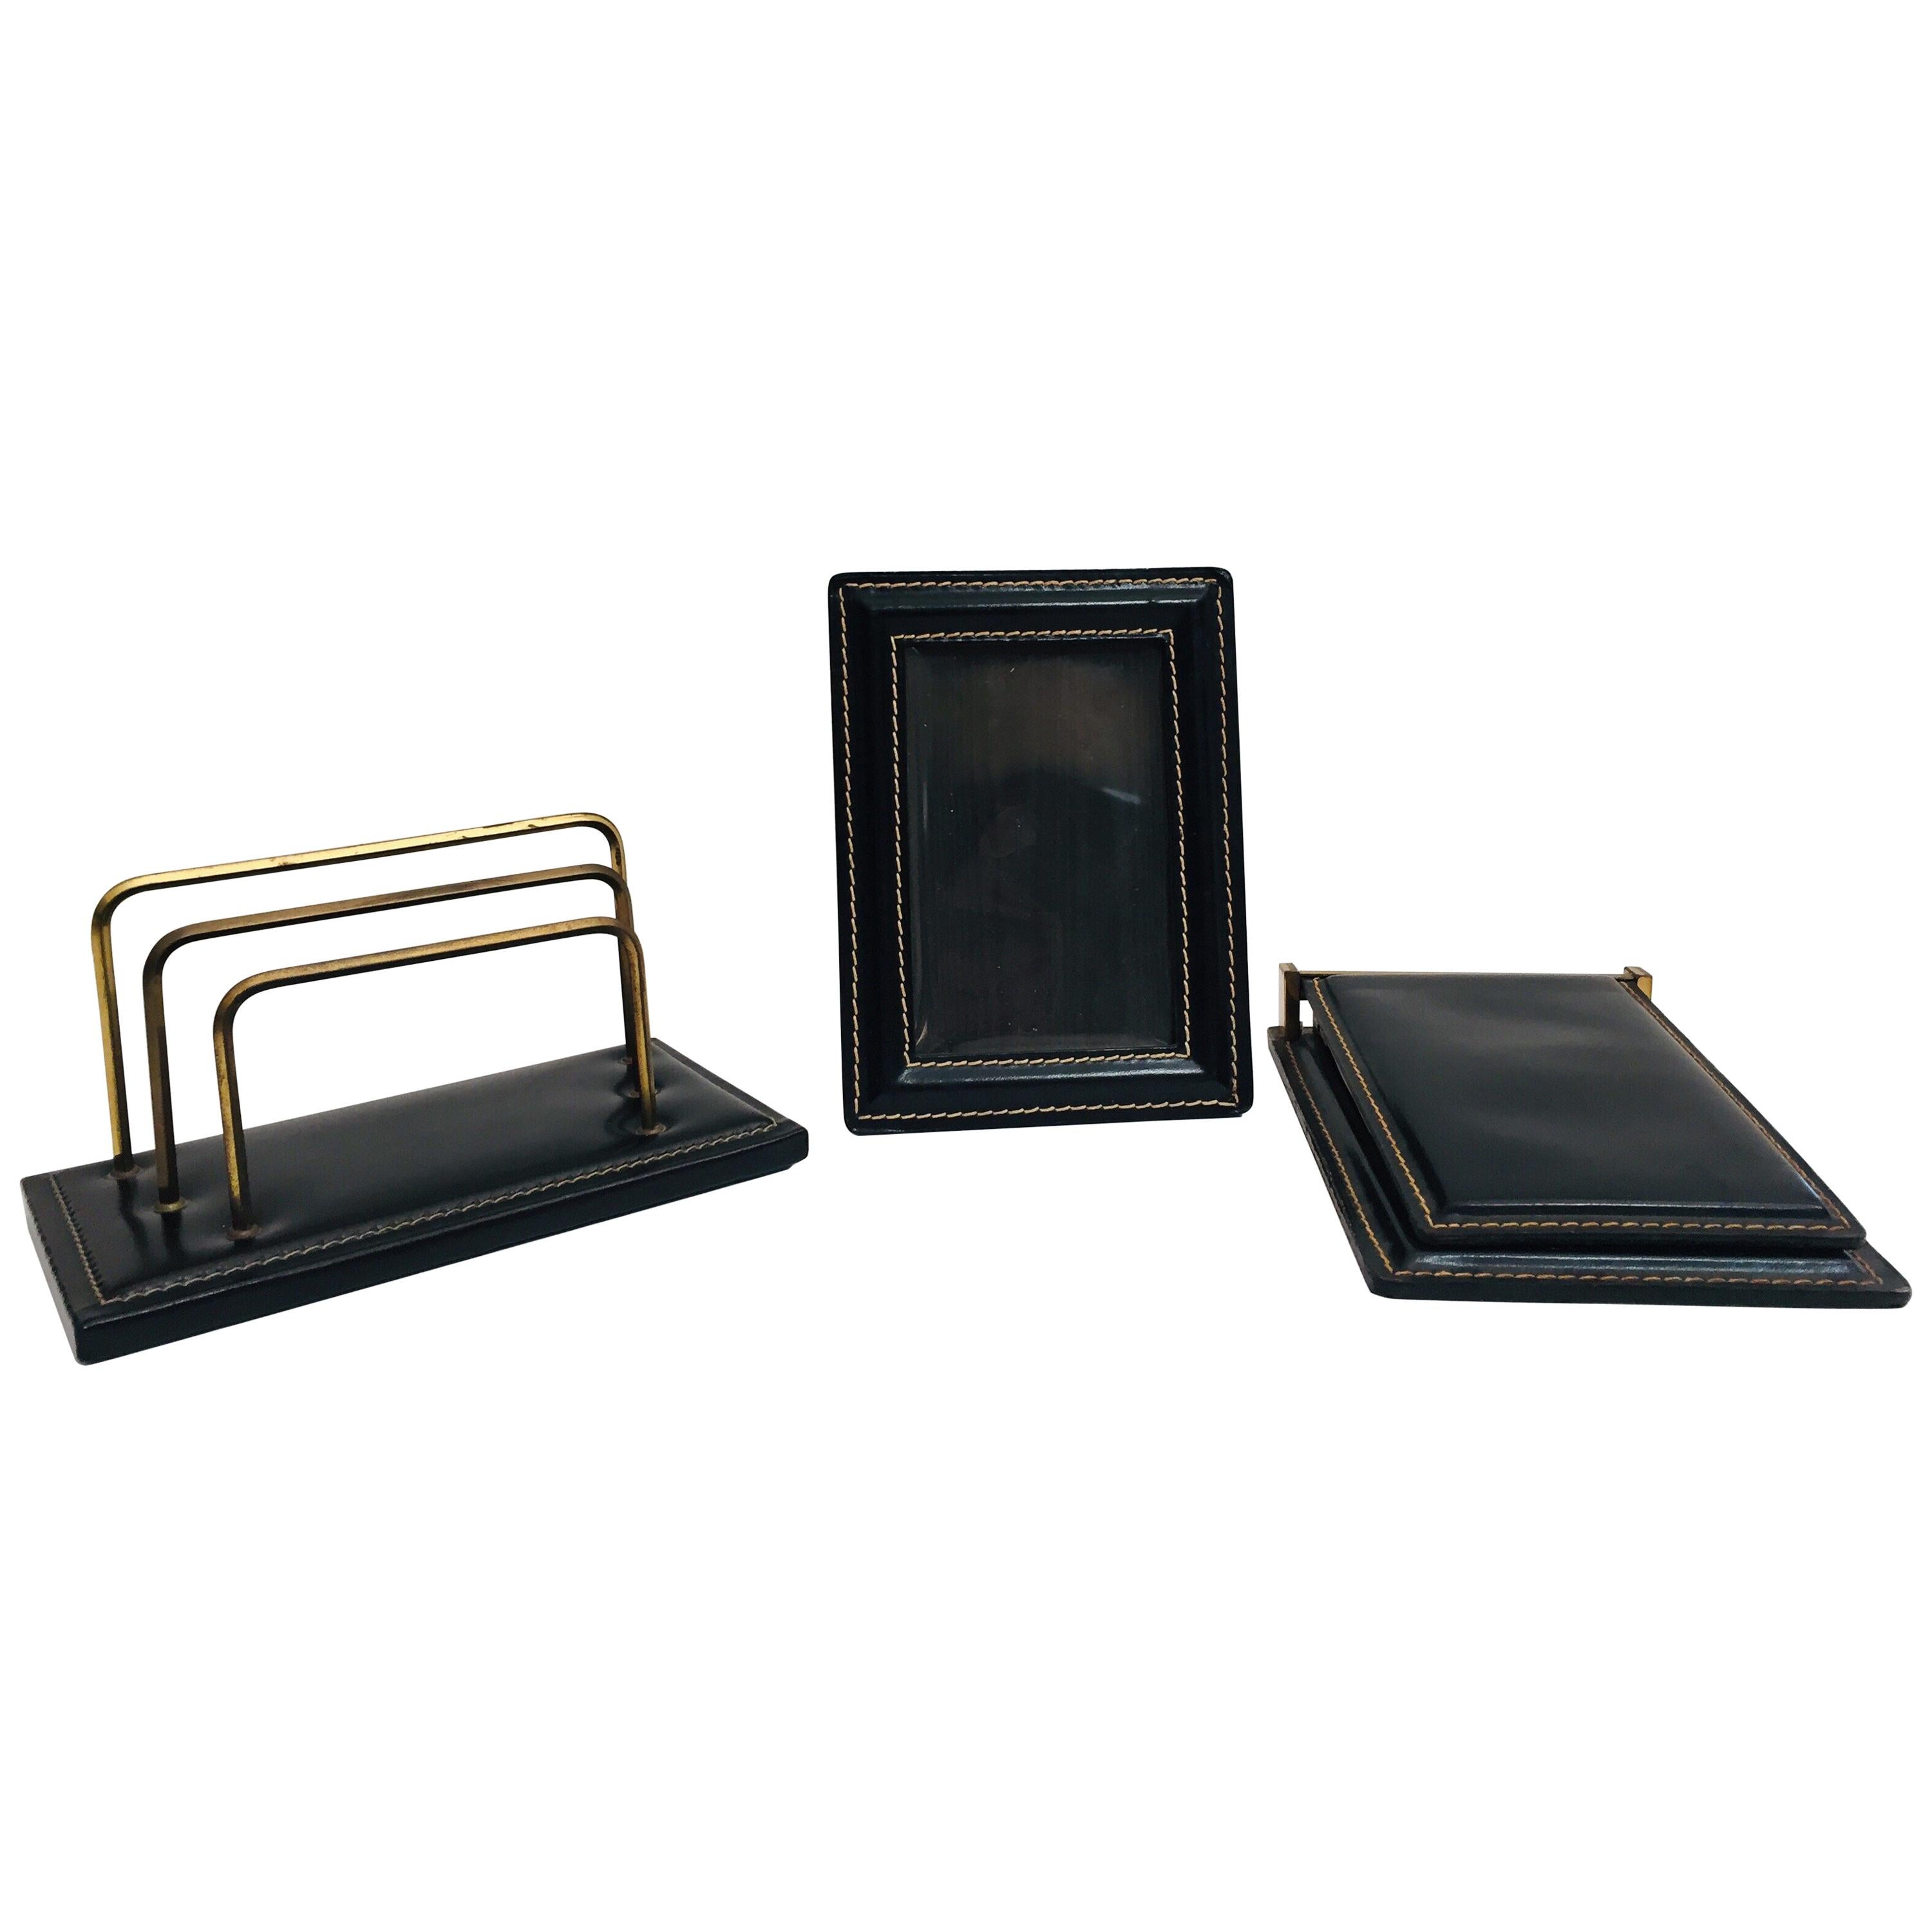 Vintage Desk Set, Black Leather and Brass Letter Rack, Picture Frame and Notepad